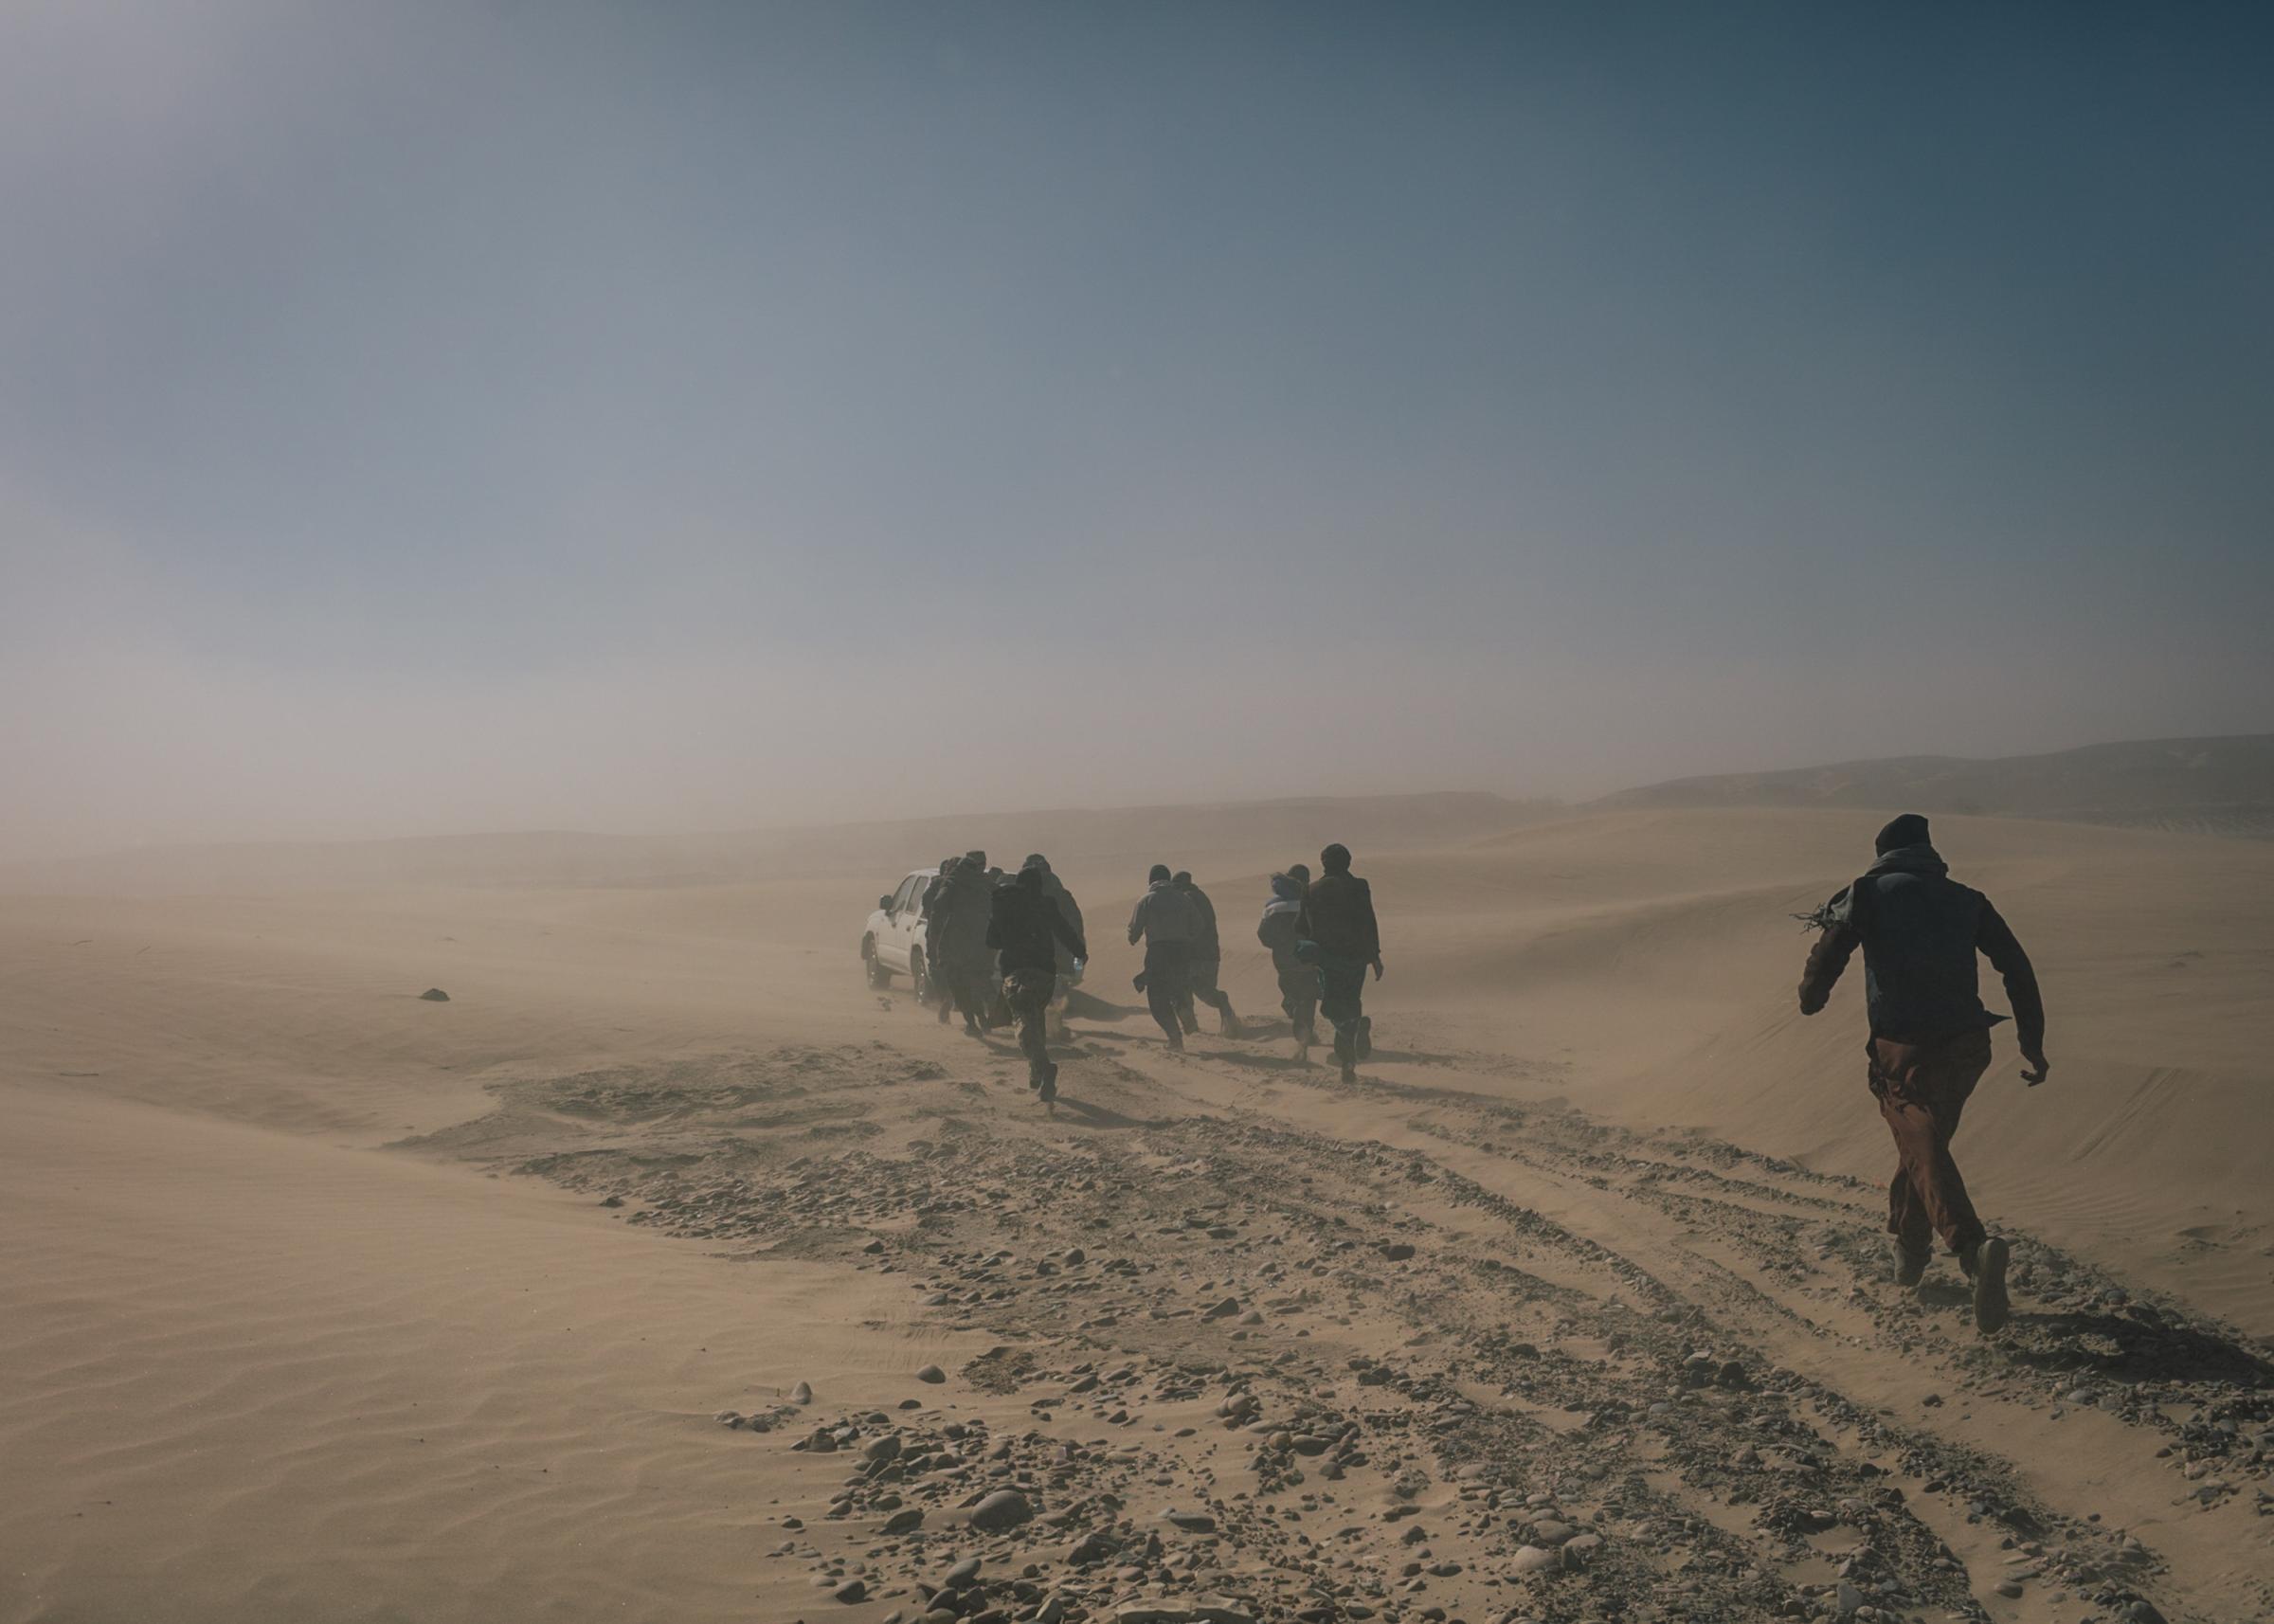 Refugees ran through a sand storm on the way through the desert.